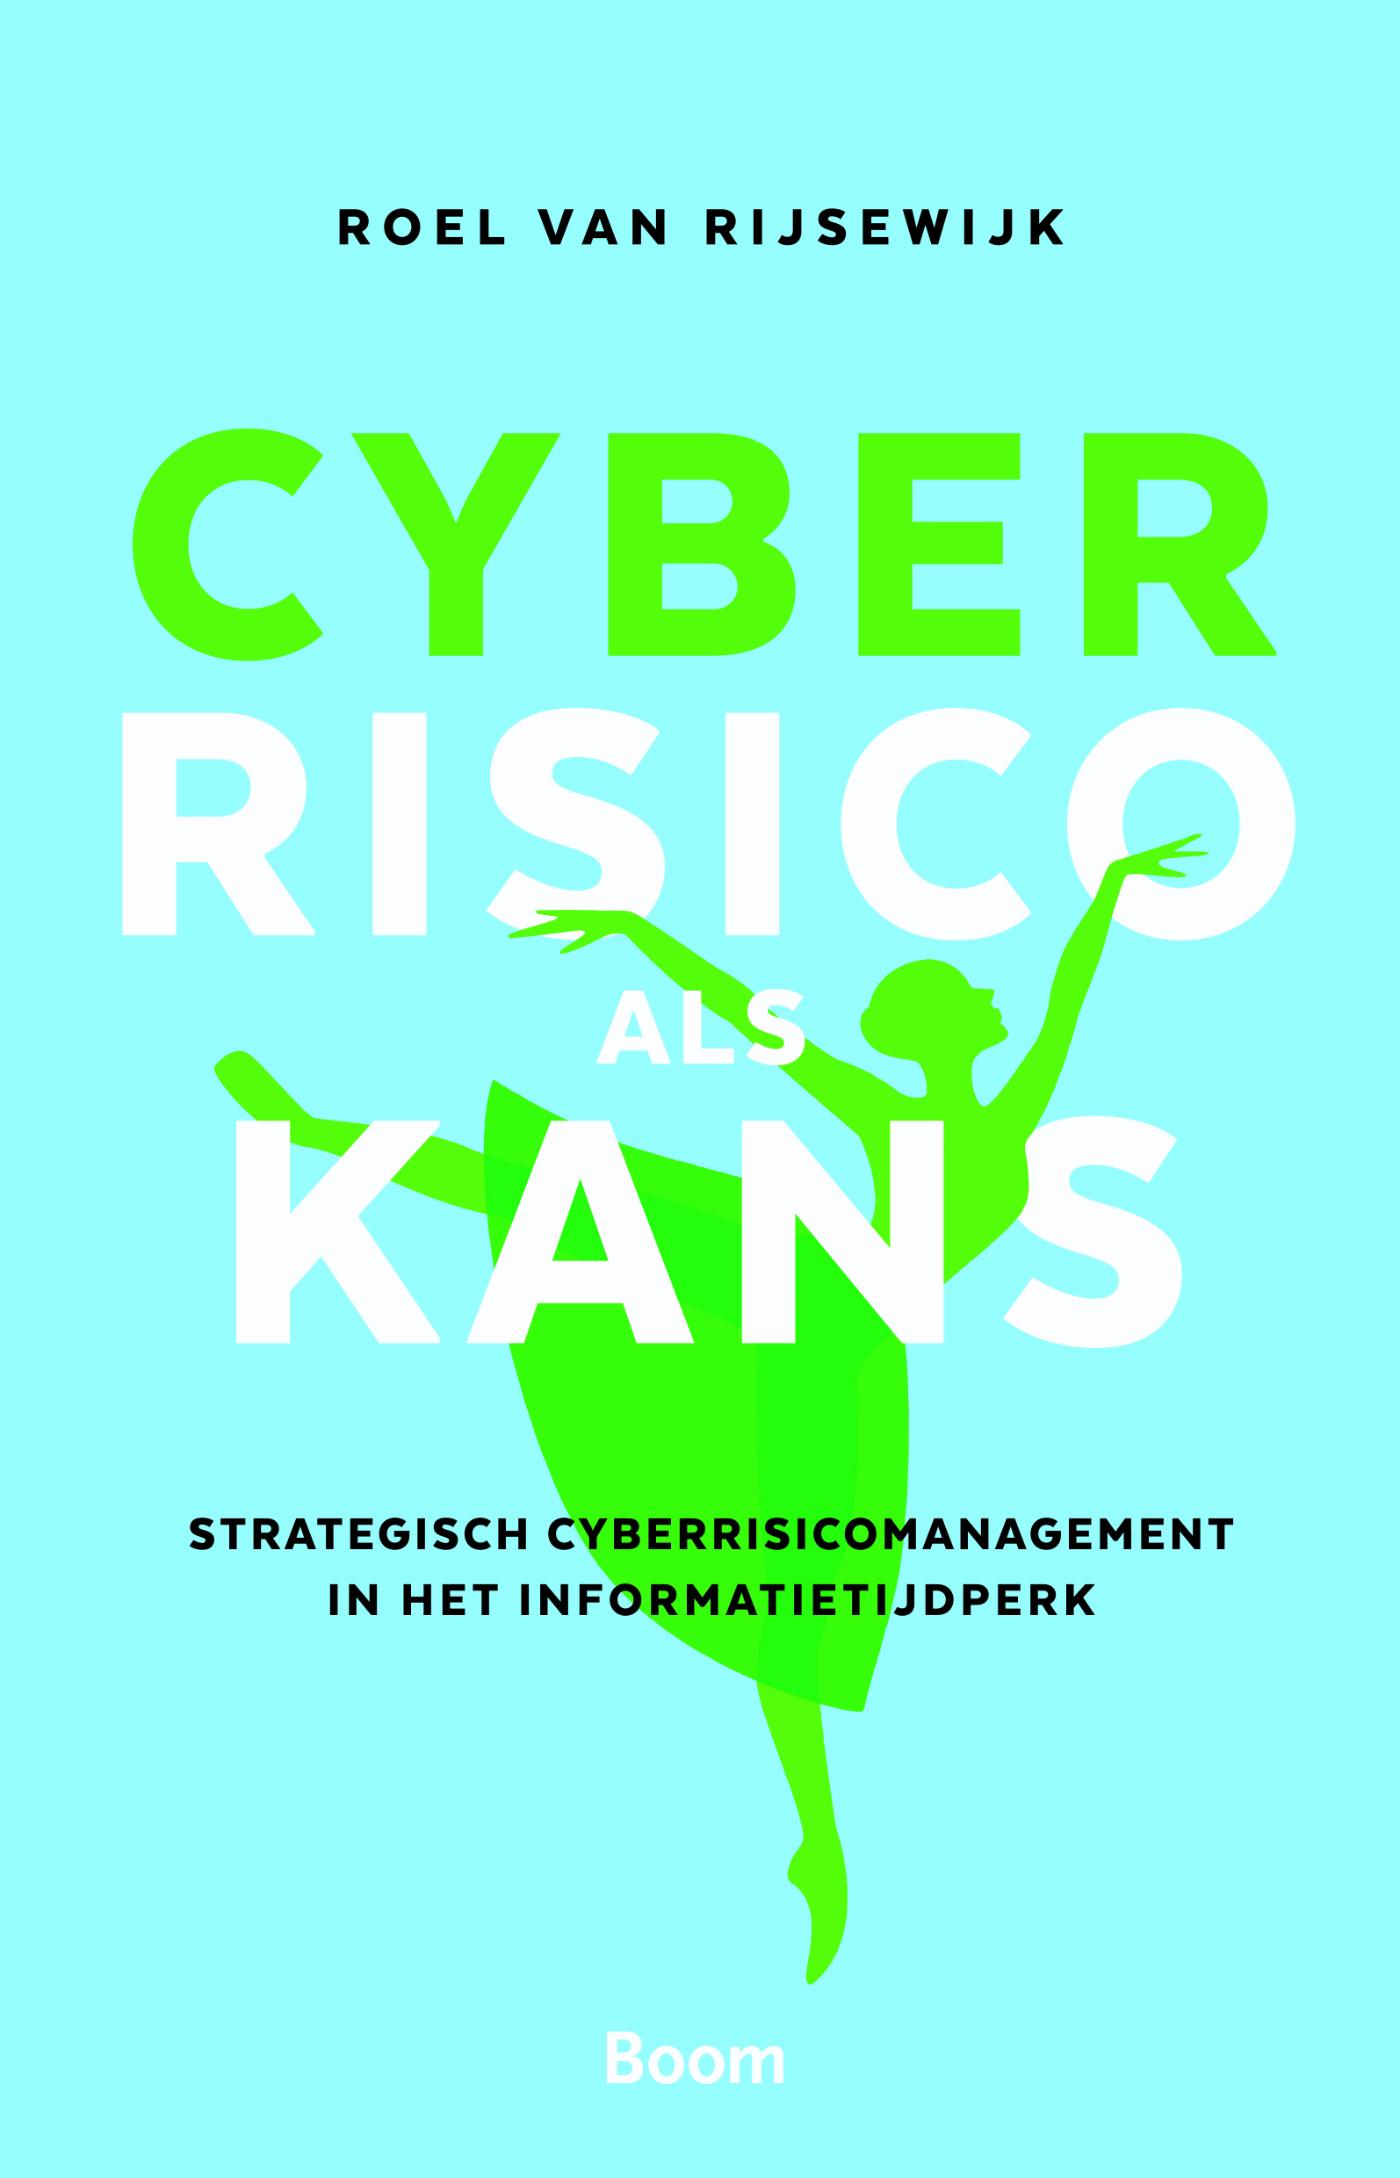 Cyberrisico als kans (Ebook)